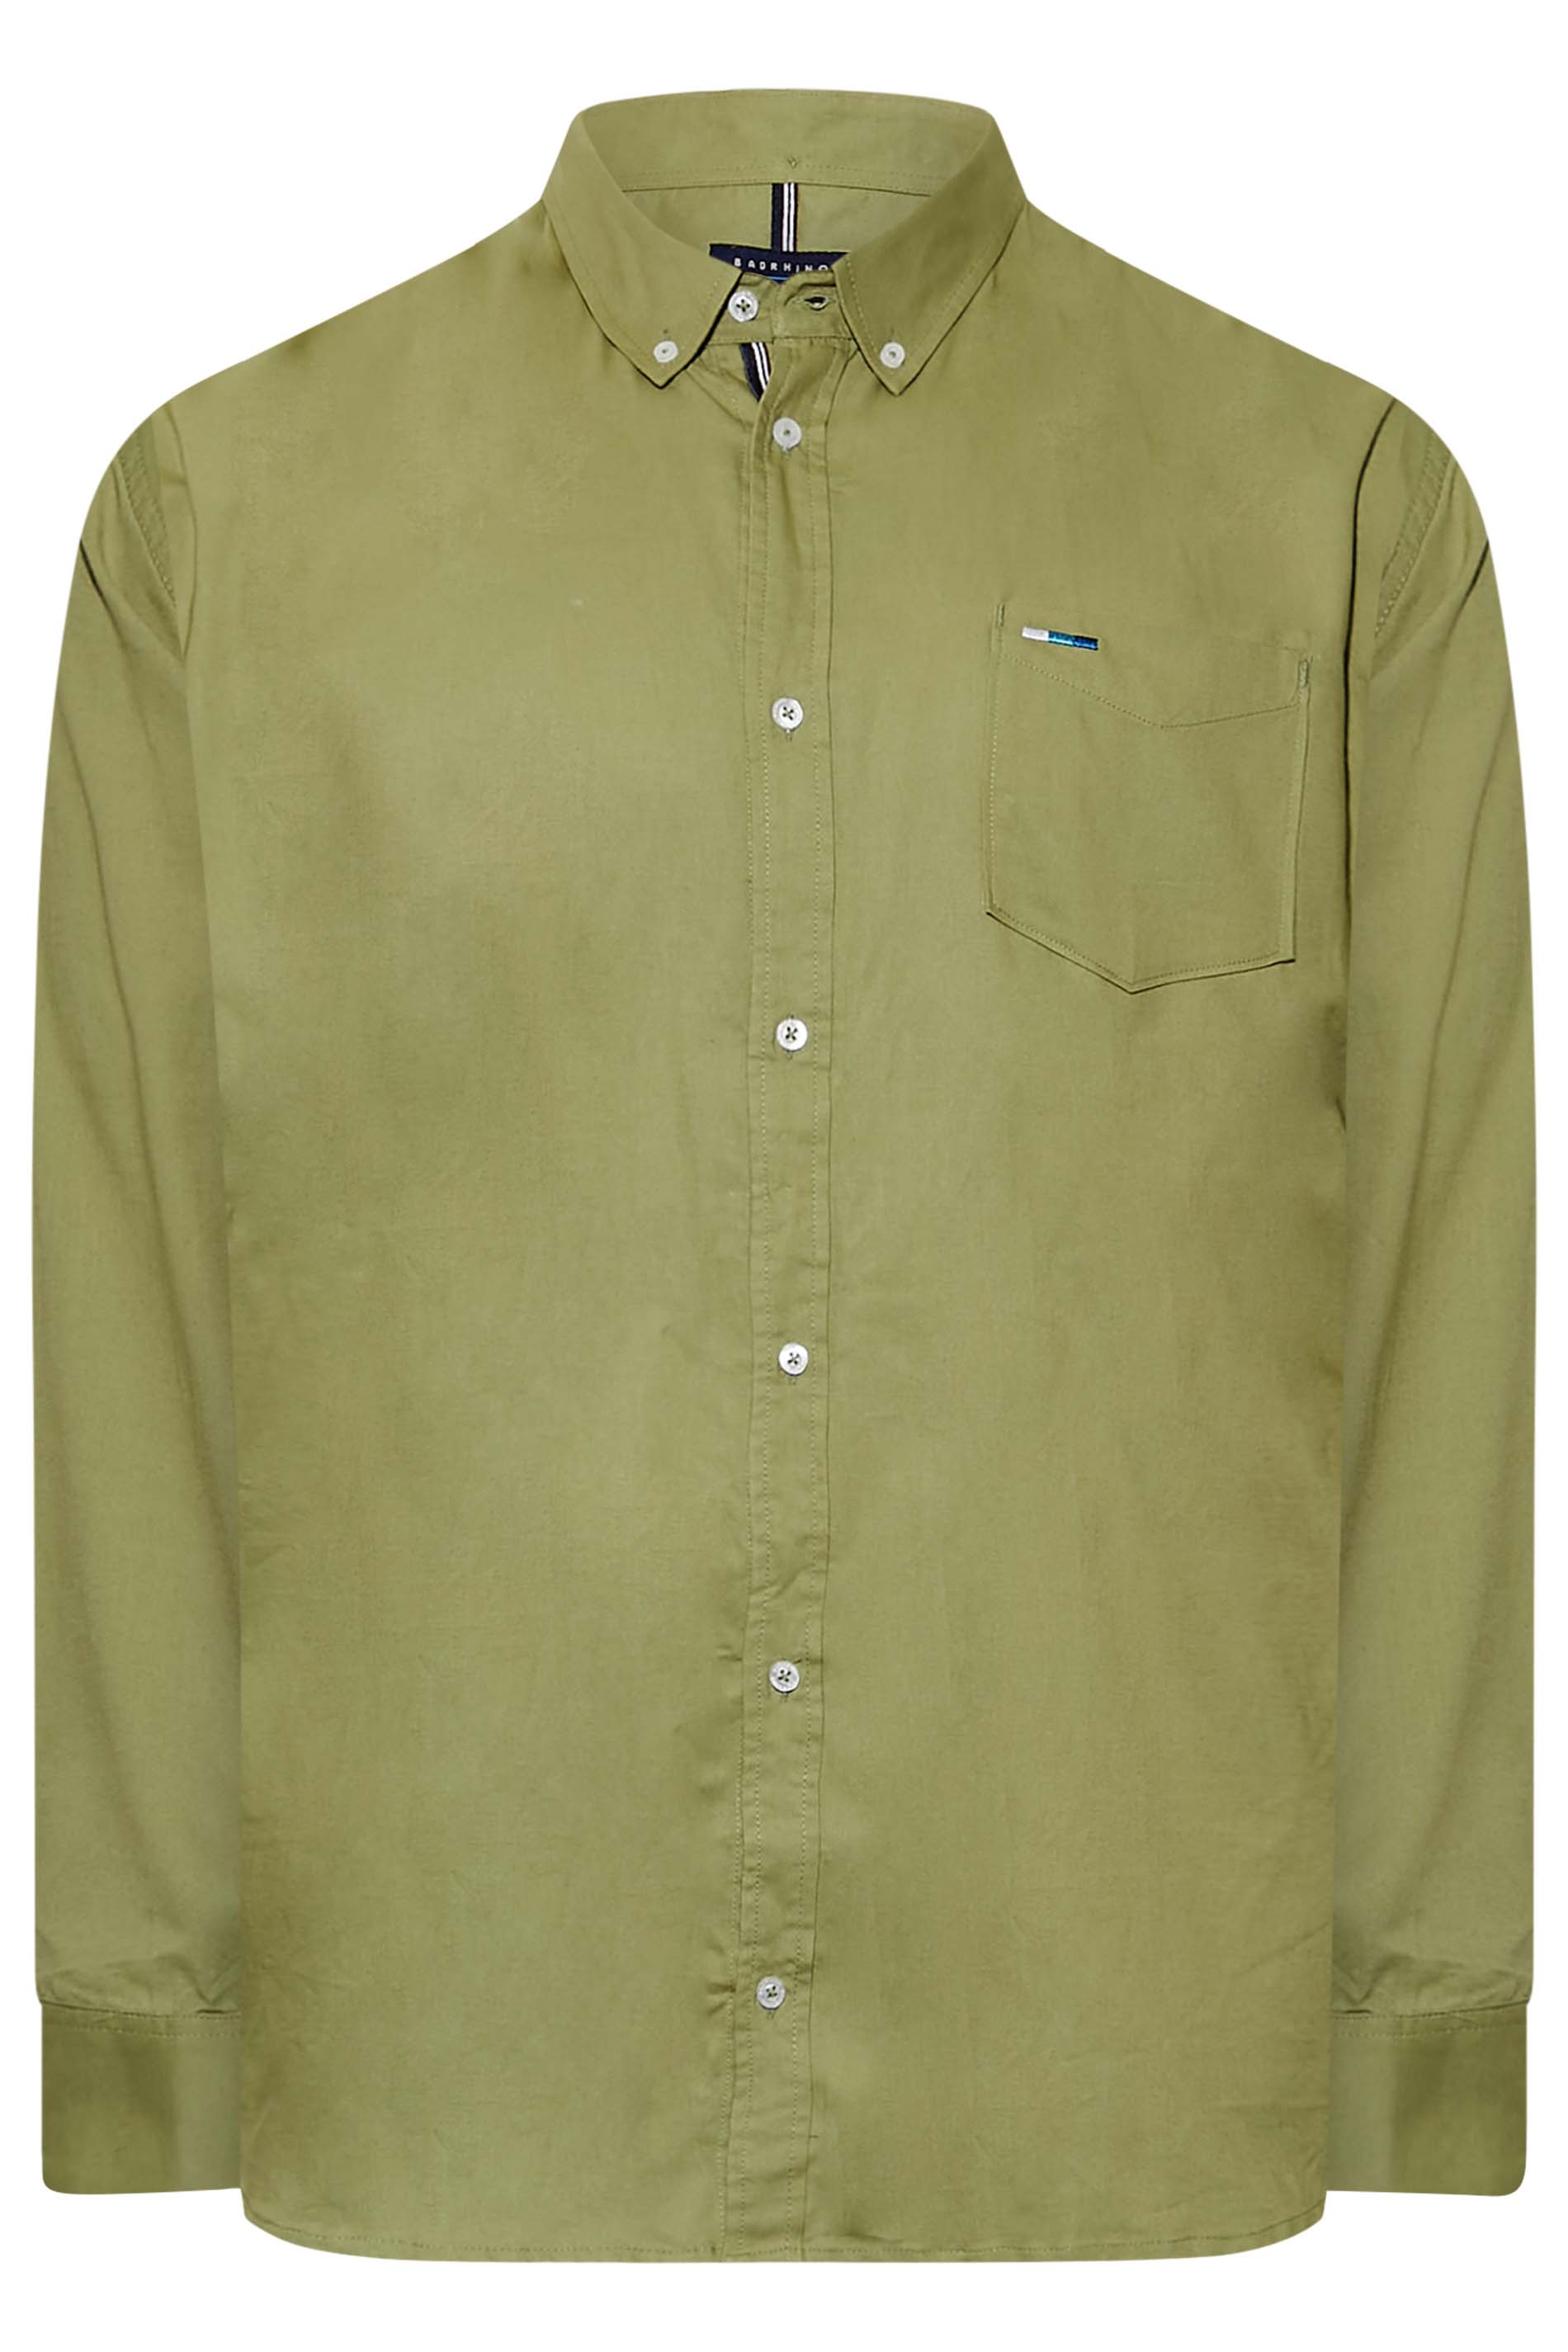 BadRhino Big & Tall Sage Green Long Sleeve Oxford Shirt | BadRhino 3